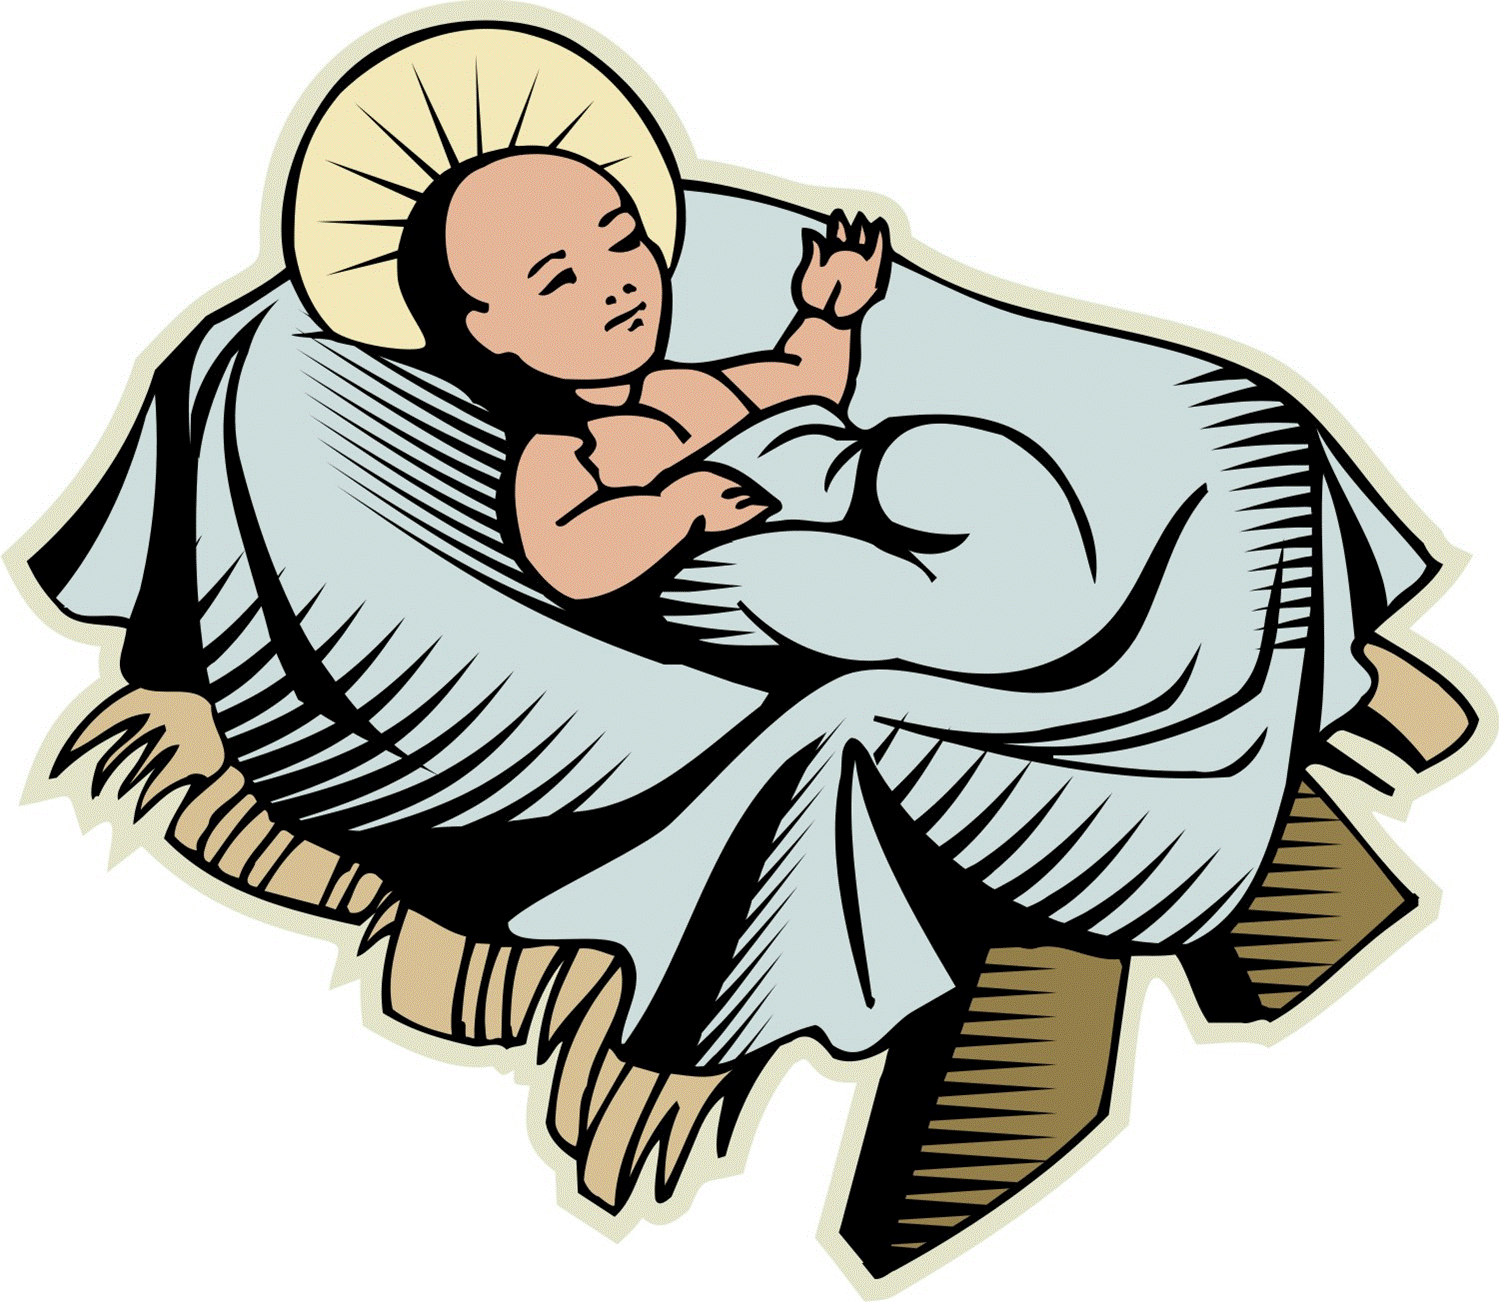 Free Baby Jesus In A Manger Image, Download Free Clip Art